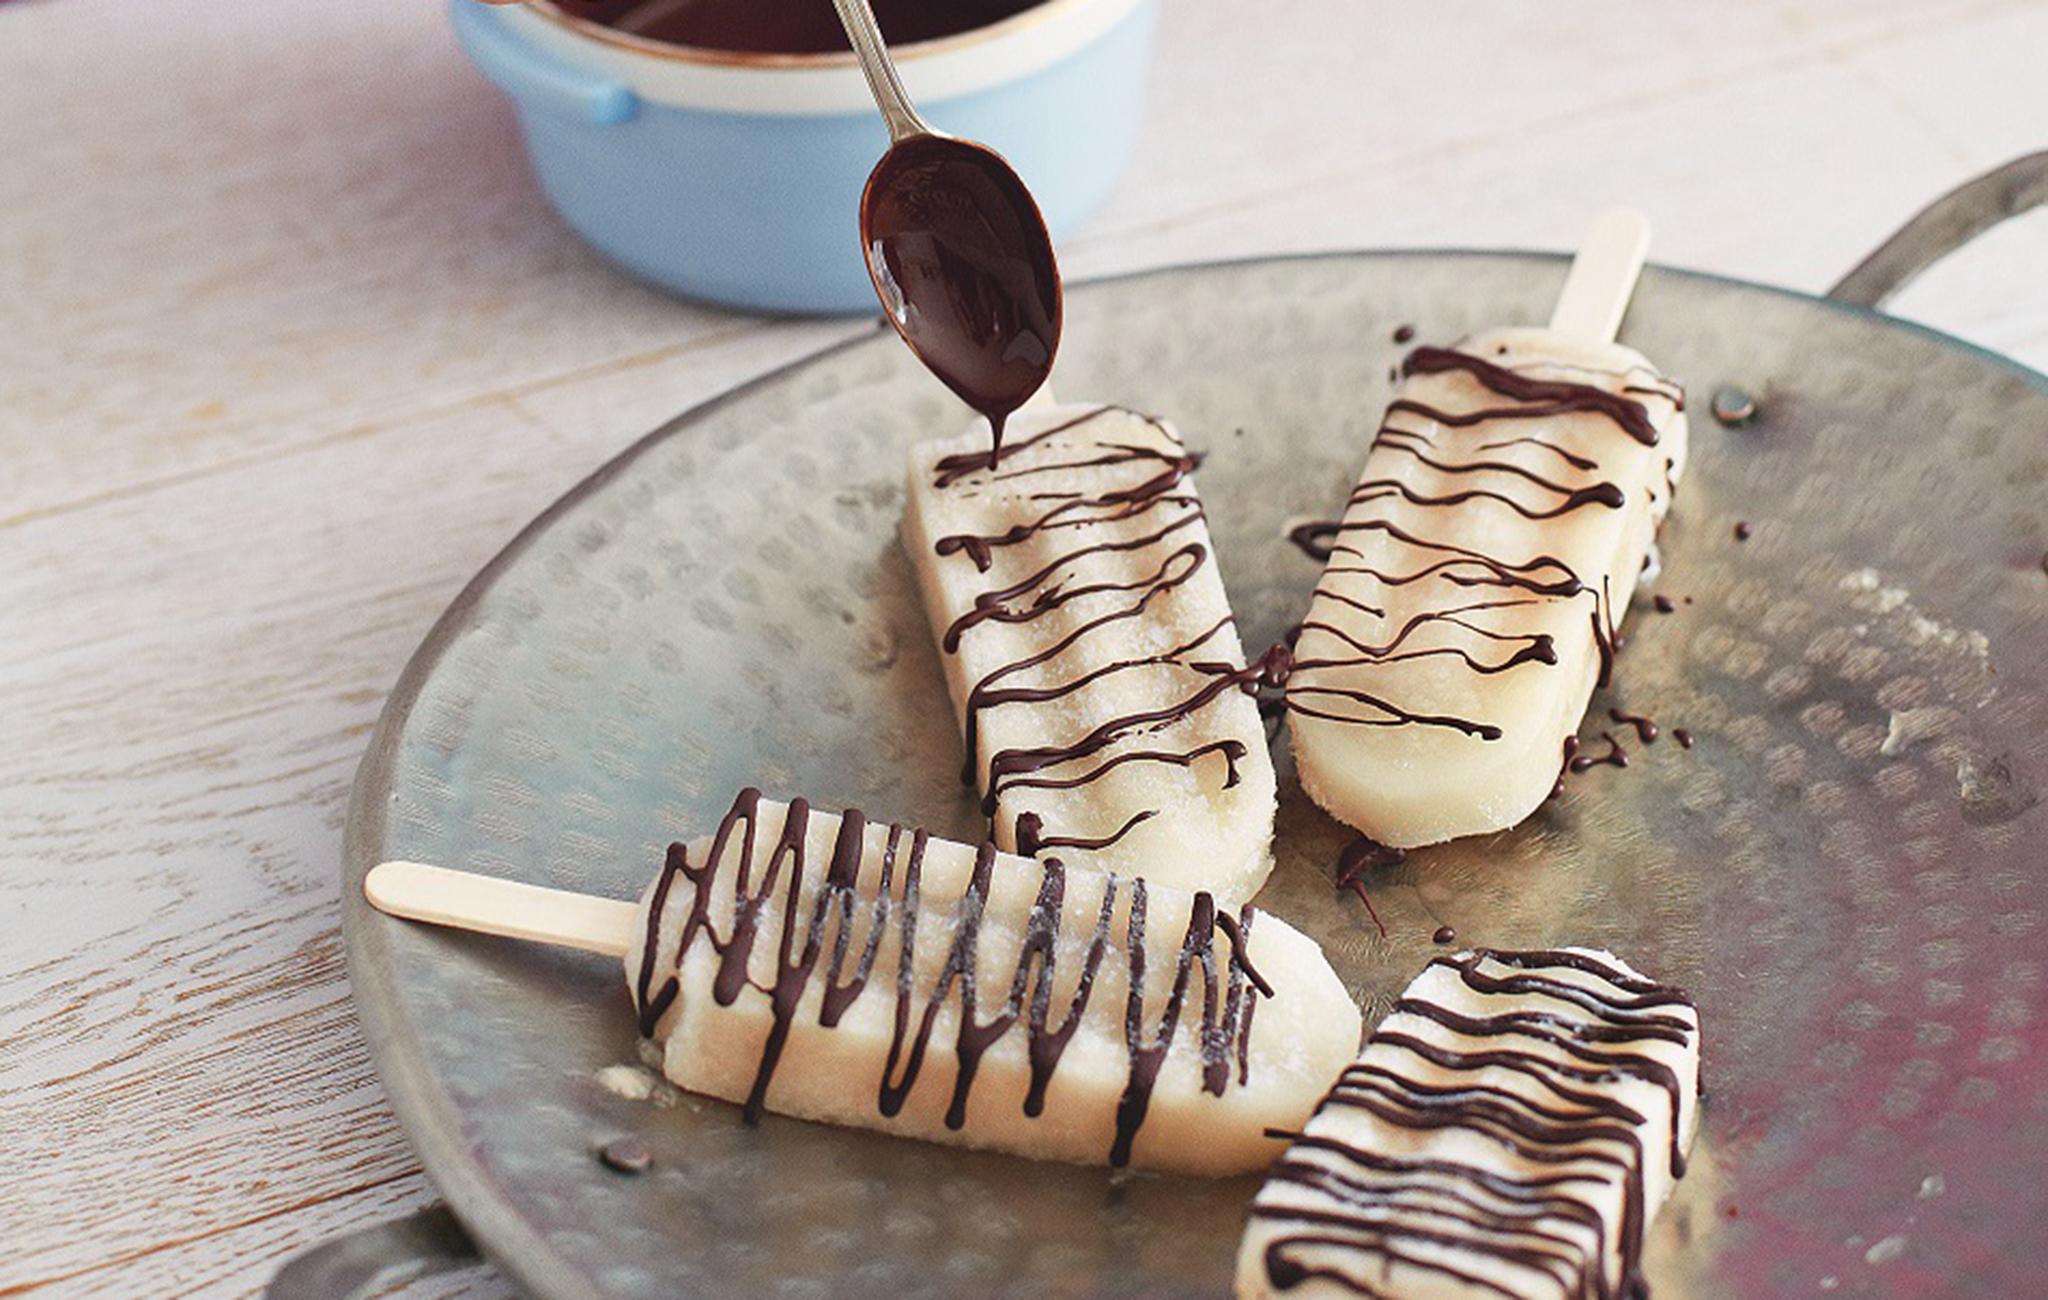 Chocolate Banana Daiquiri lollies make children's treats fun for adults too (recipe below)